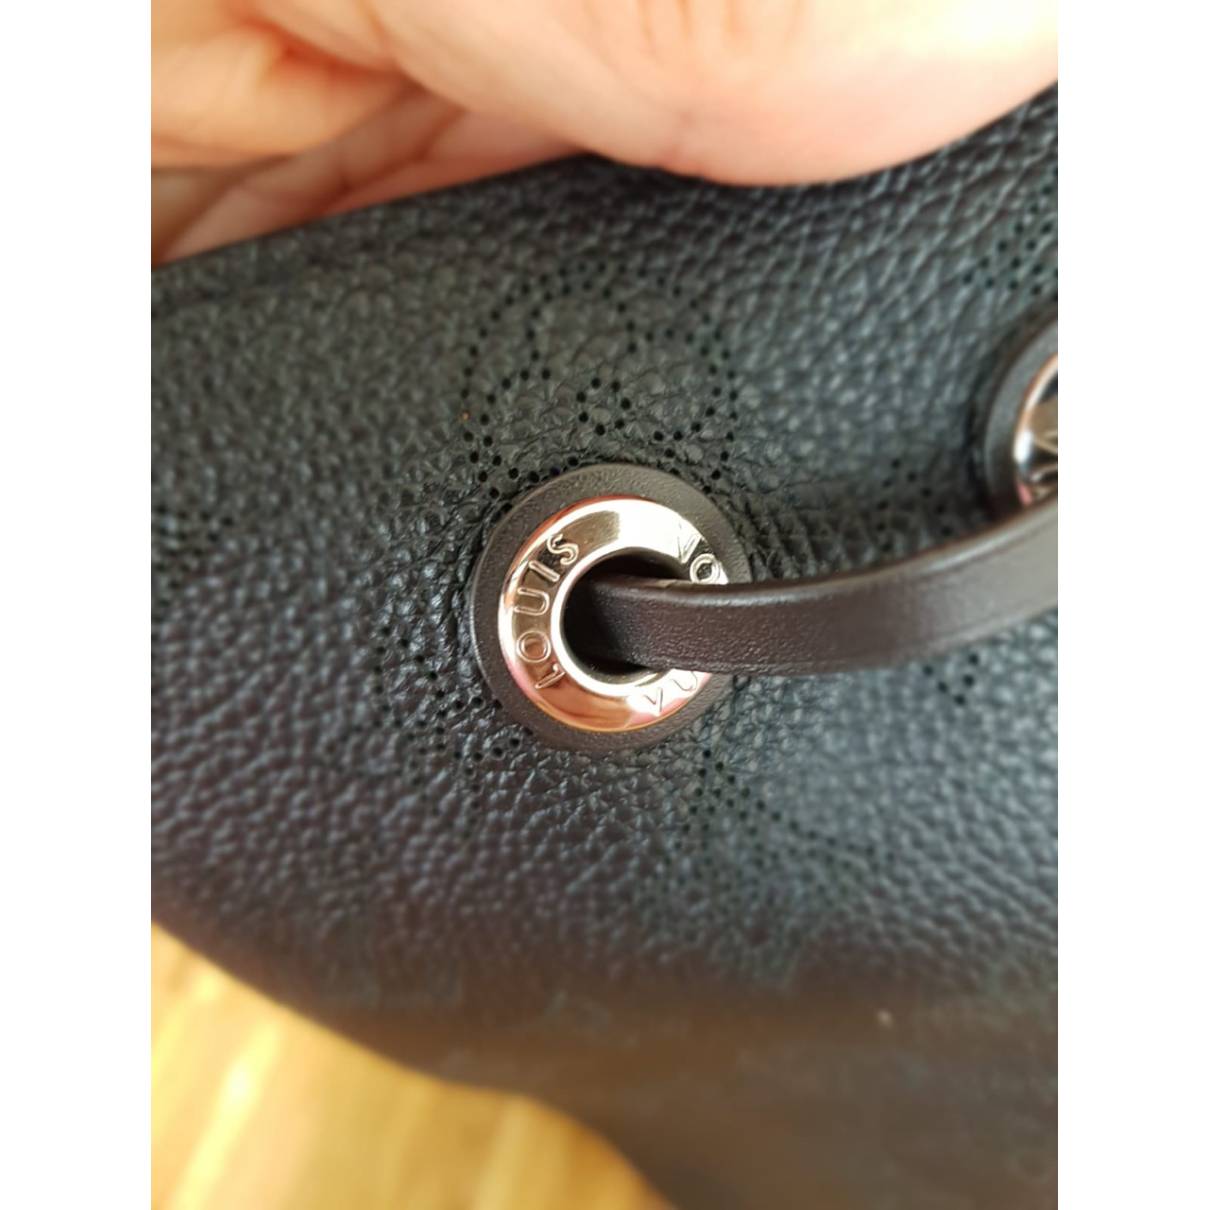 Muria pony-style calfskin handbag Louis Vuitton